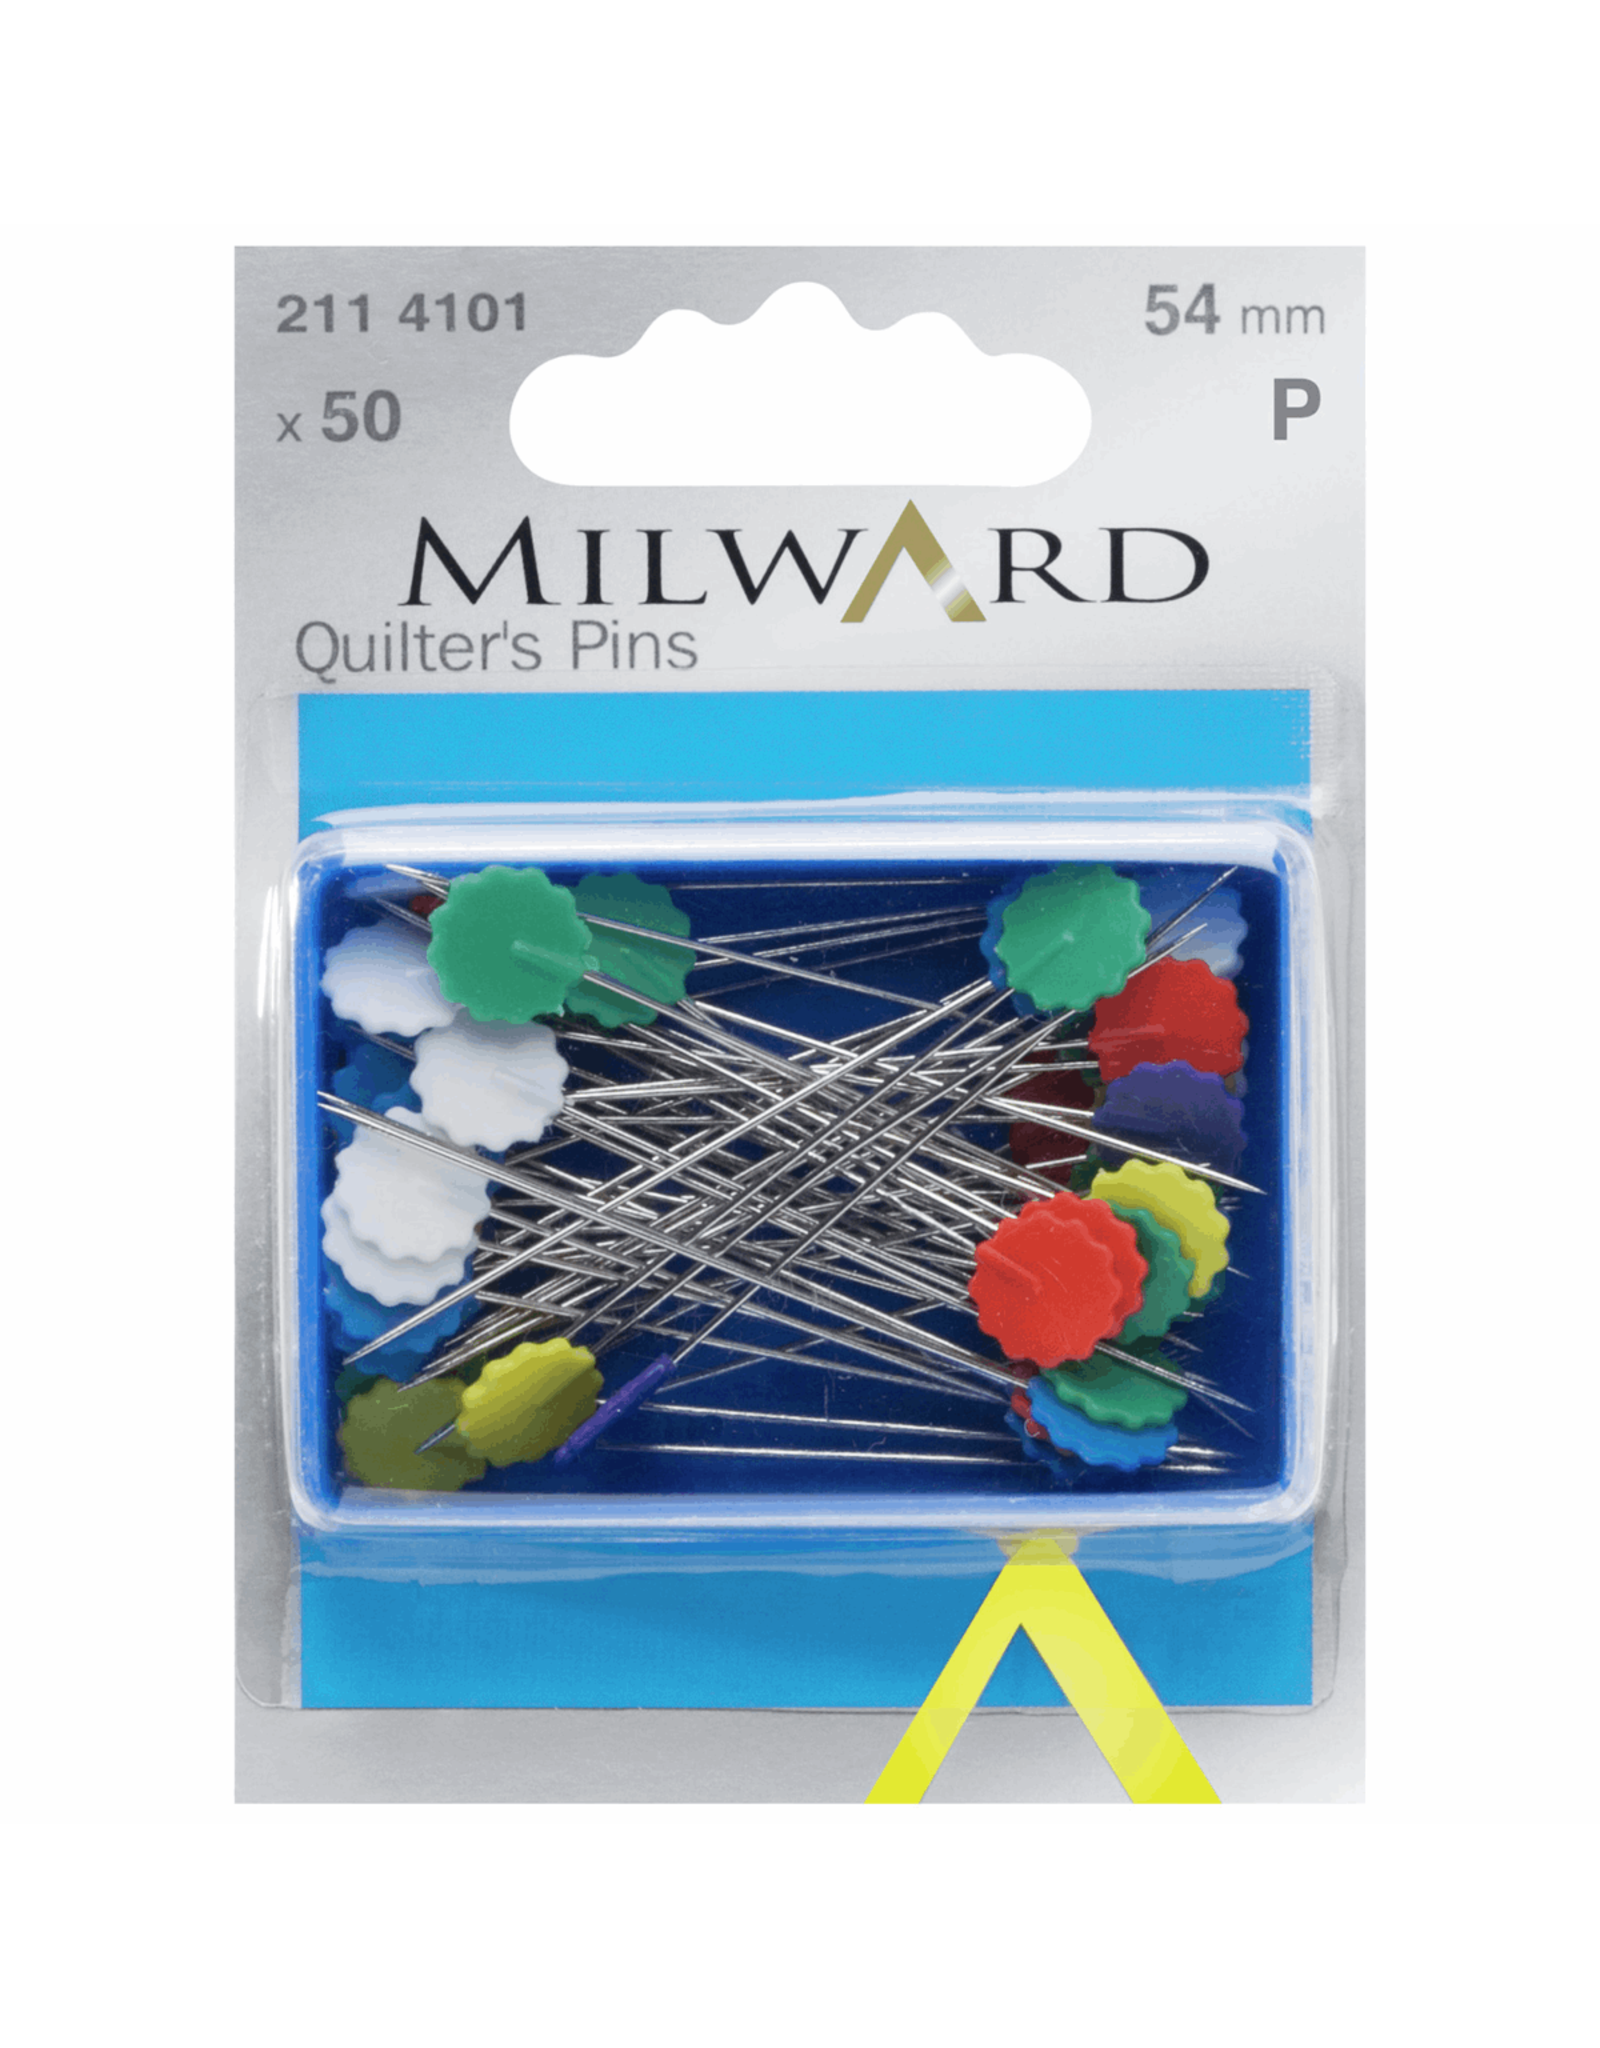 Milward Milward 50 quilters pins 54mm